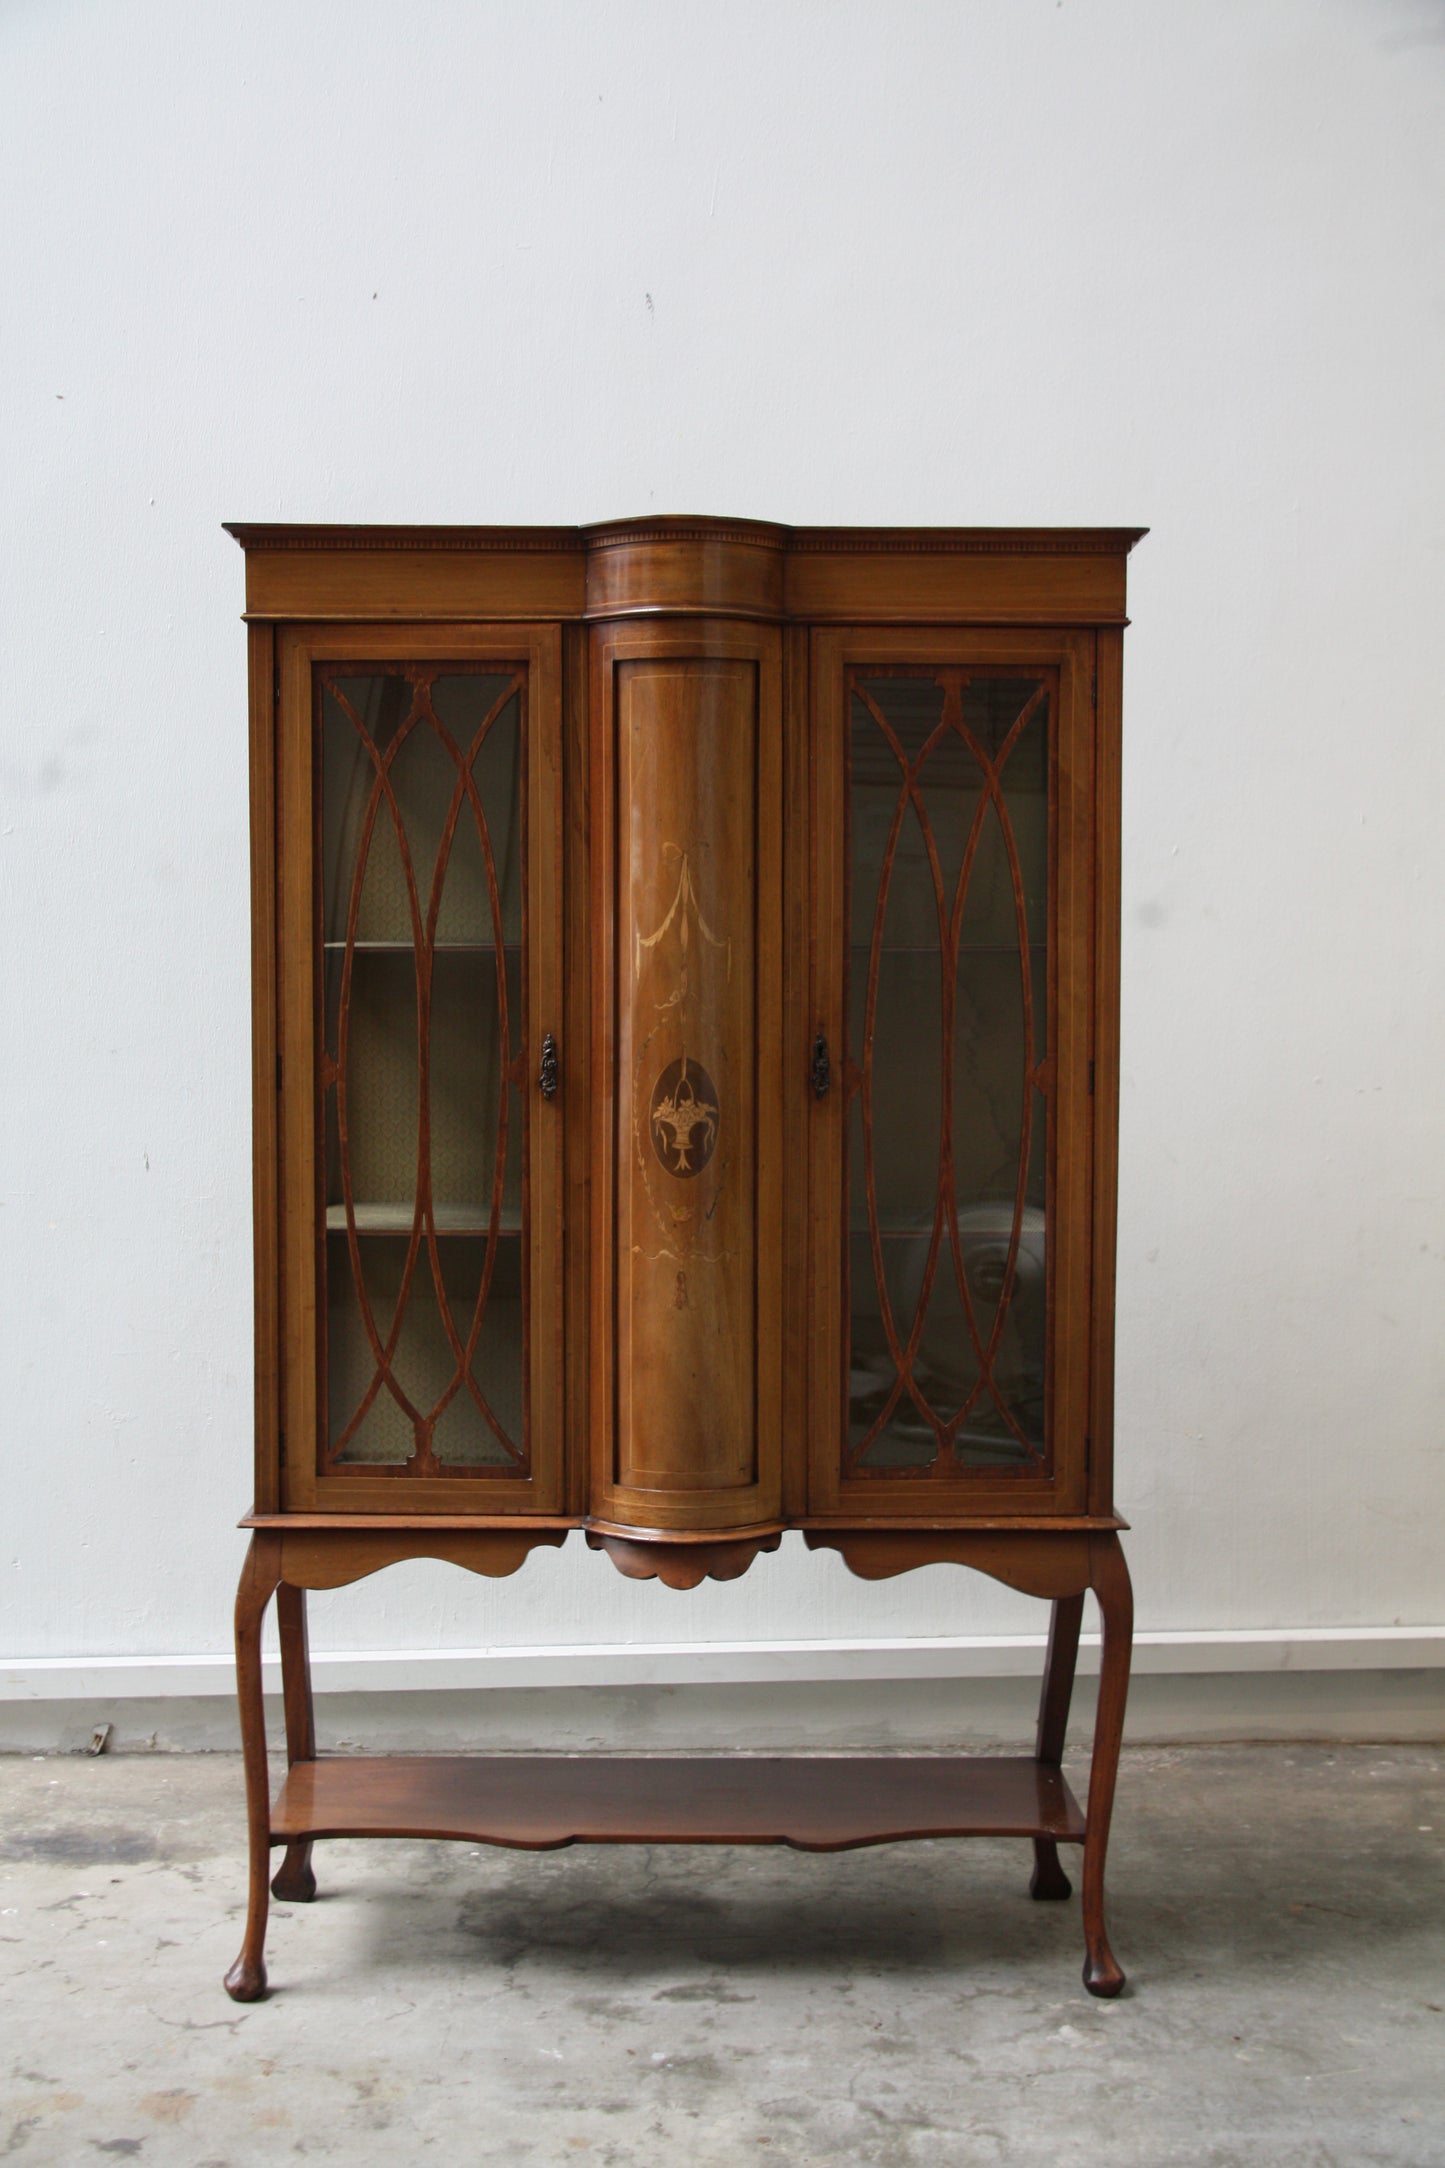 Quality Antique Edwardian Mahogany Inlaid Large Display Curios Cabinet c.1910